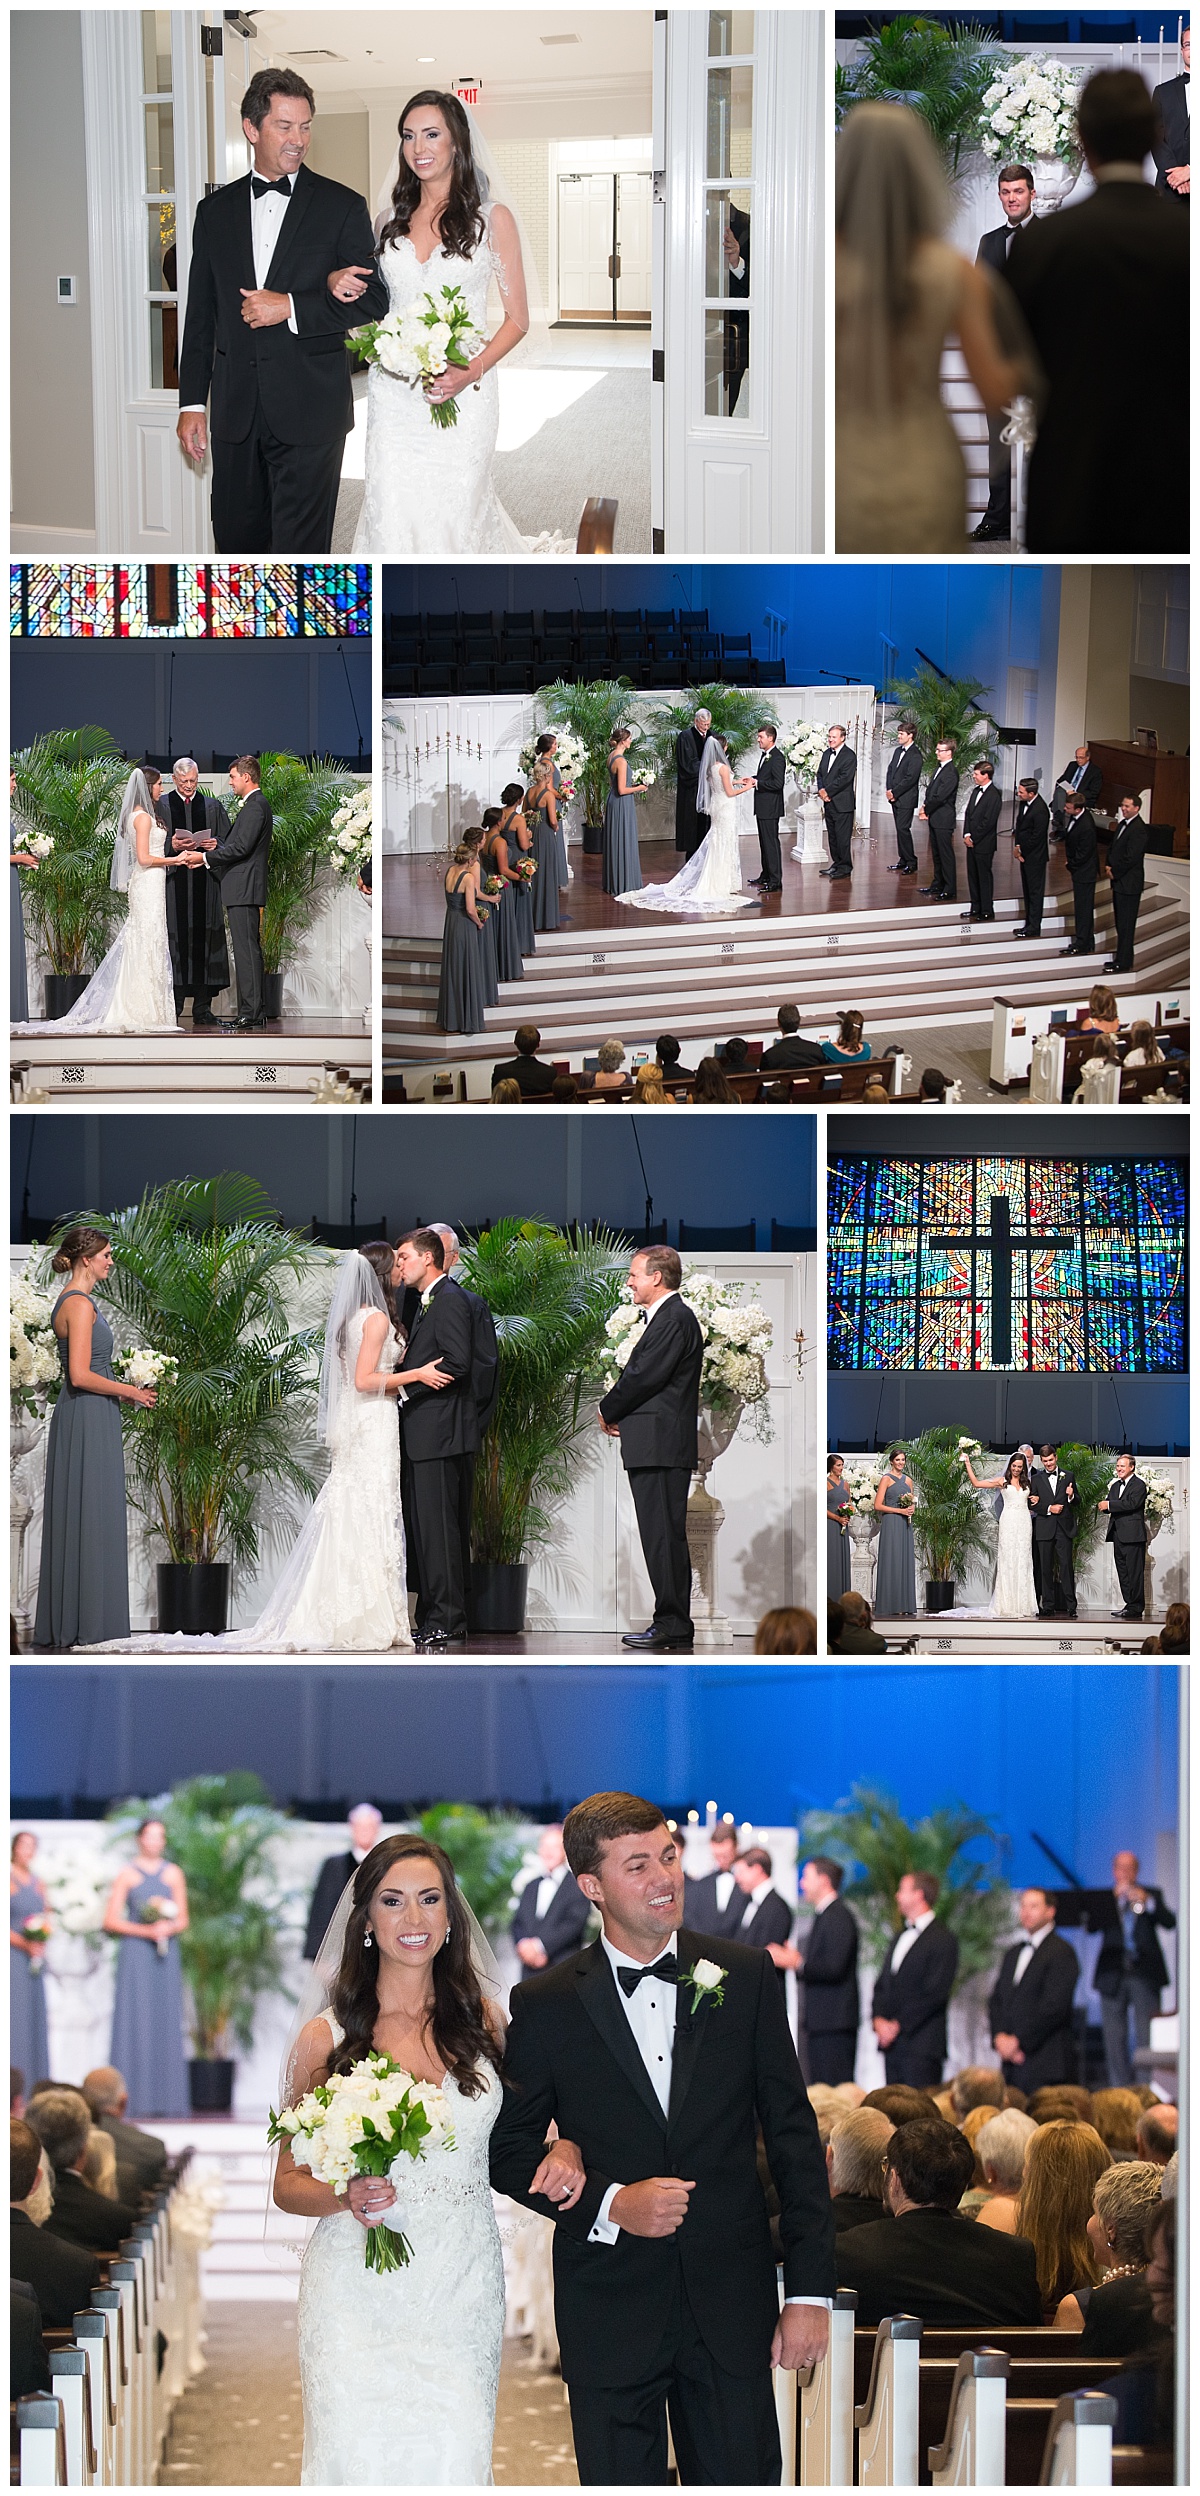 Wedding ceremony at NE Presbyterian church